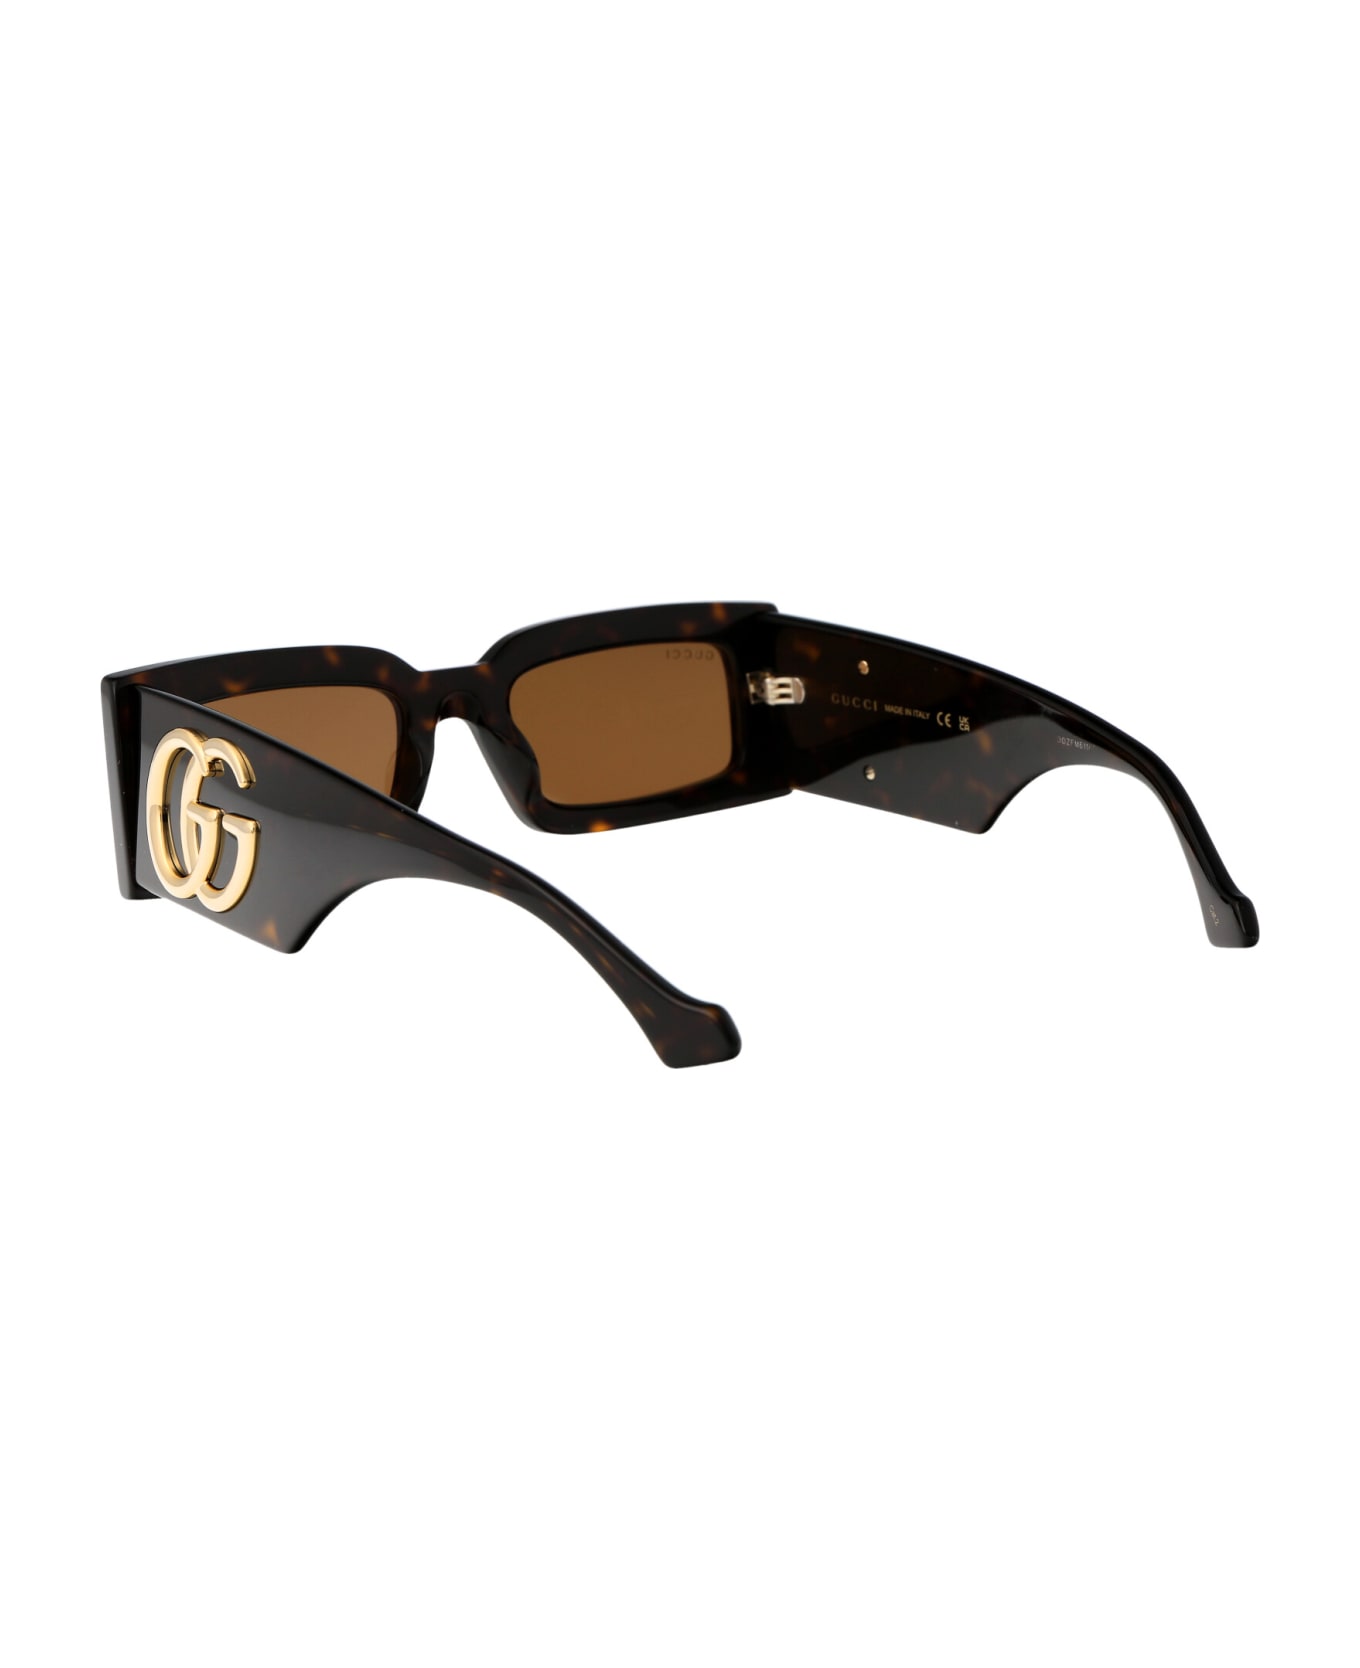 Gucci Eyewear Gg1425s Sunglasses - 002 HAVANA HAVANA BROWN